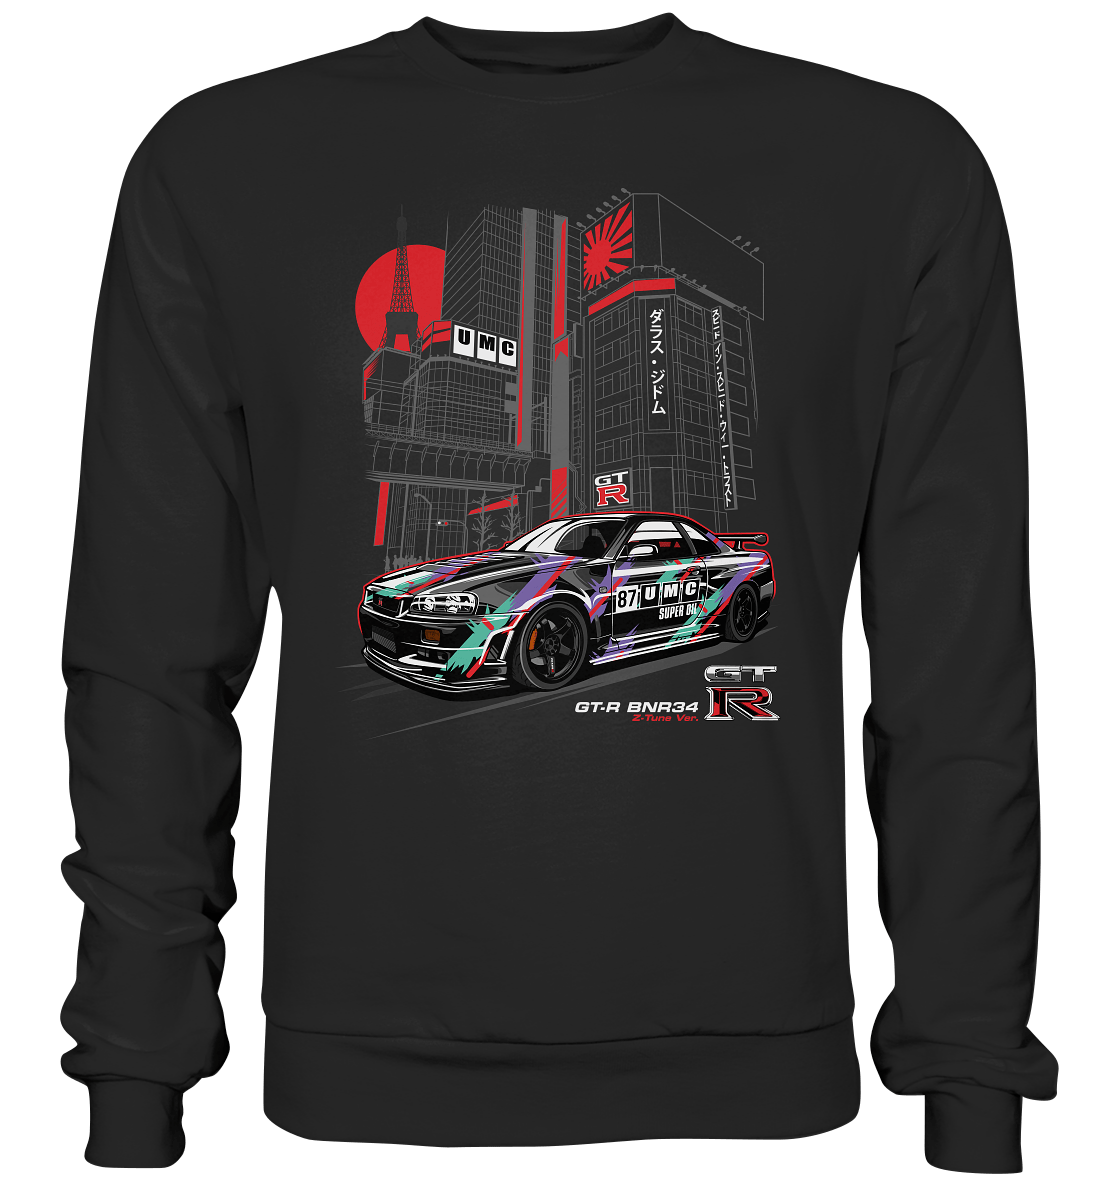 UMC Nissan Skyline R34 GT-R - Premium Sweatshirt - MotoMerch.de